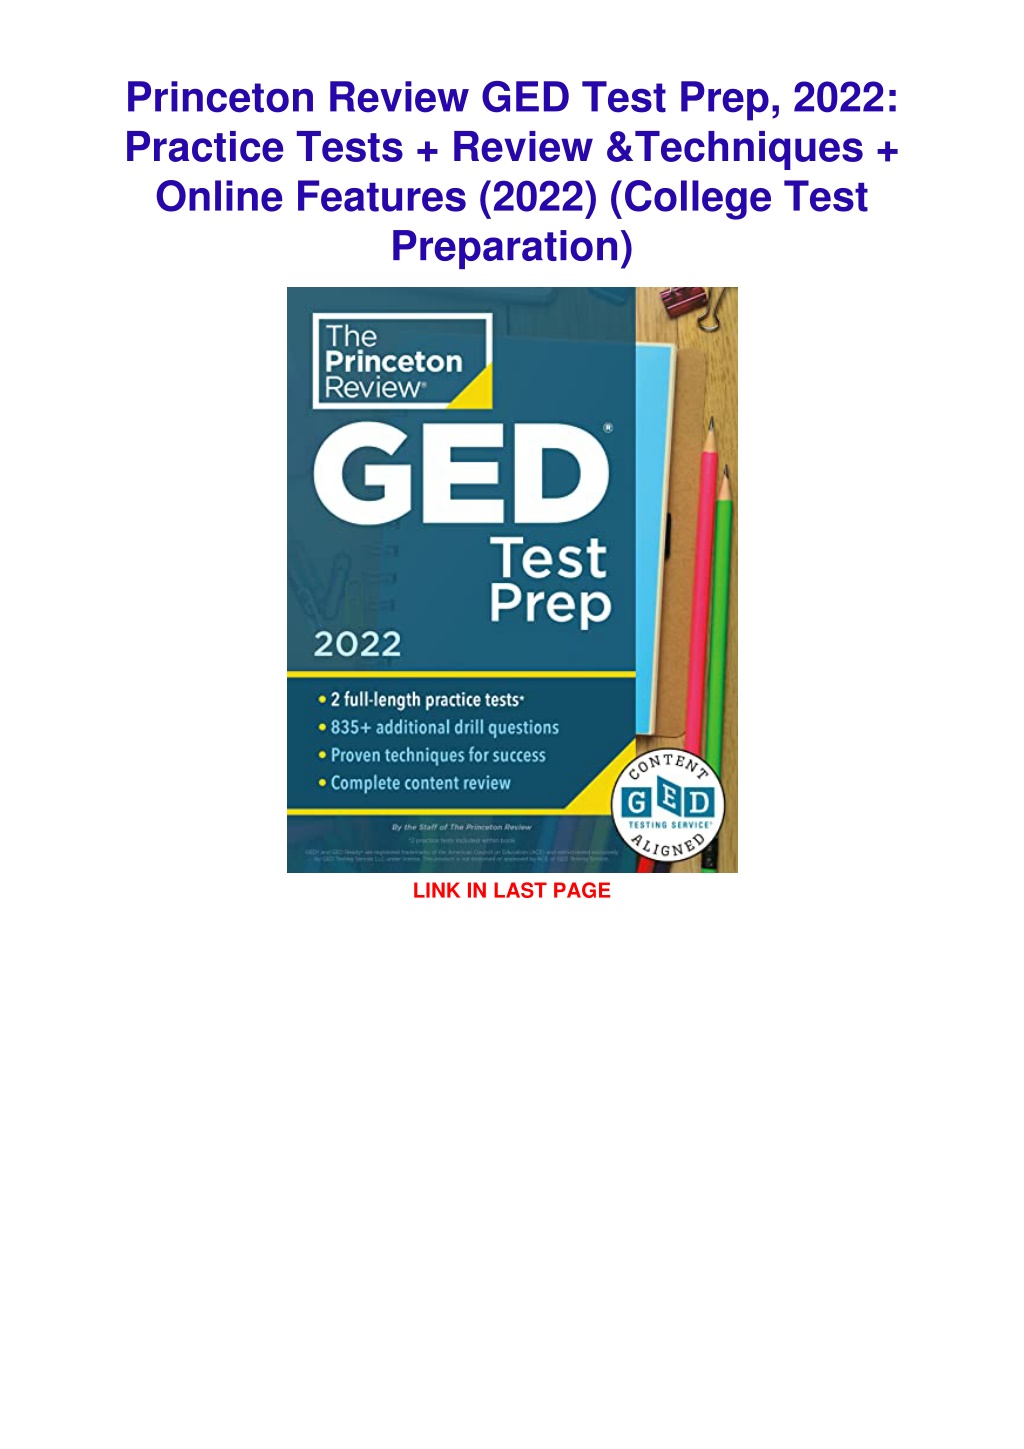 PPT get [PDF] Download Princeton Review GED Test Prep, 2022 Practice